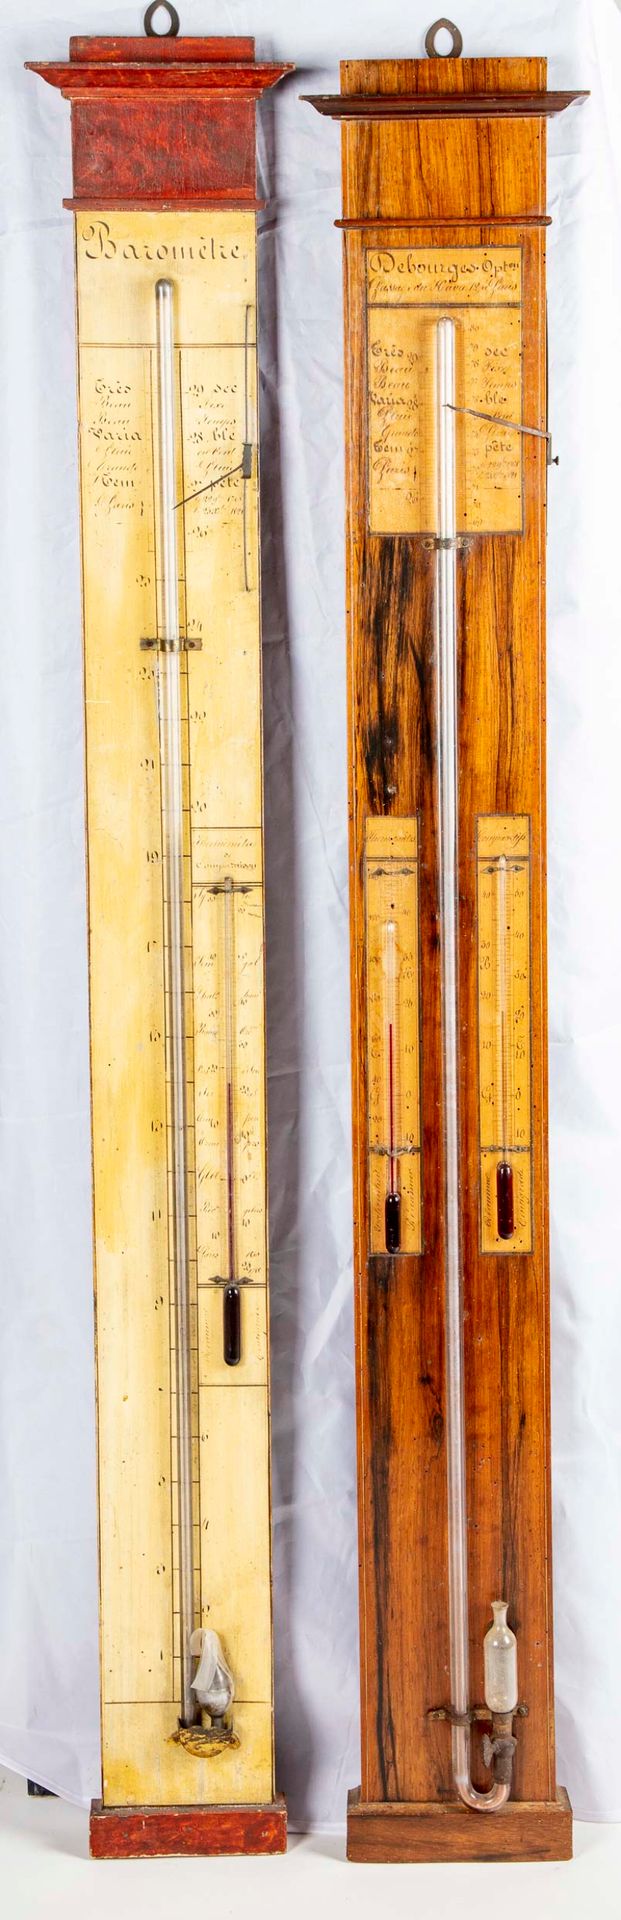 Null 两个单板气压计

在巴黎的两个签名的DEBOURGES通道杜阿弗尔中的一个。

19世纪

H.105厘米

磨损和丢失